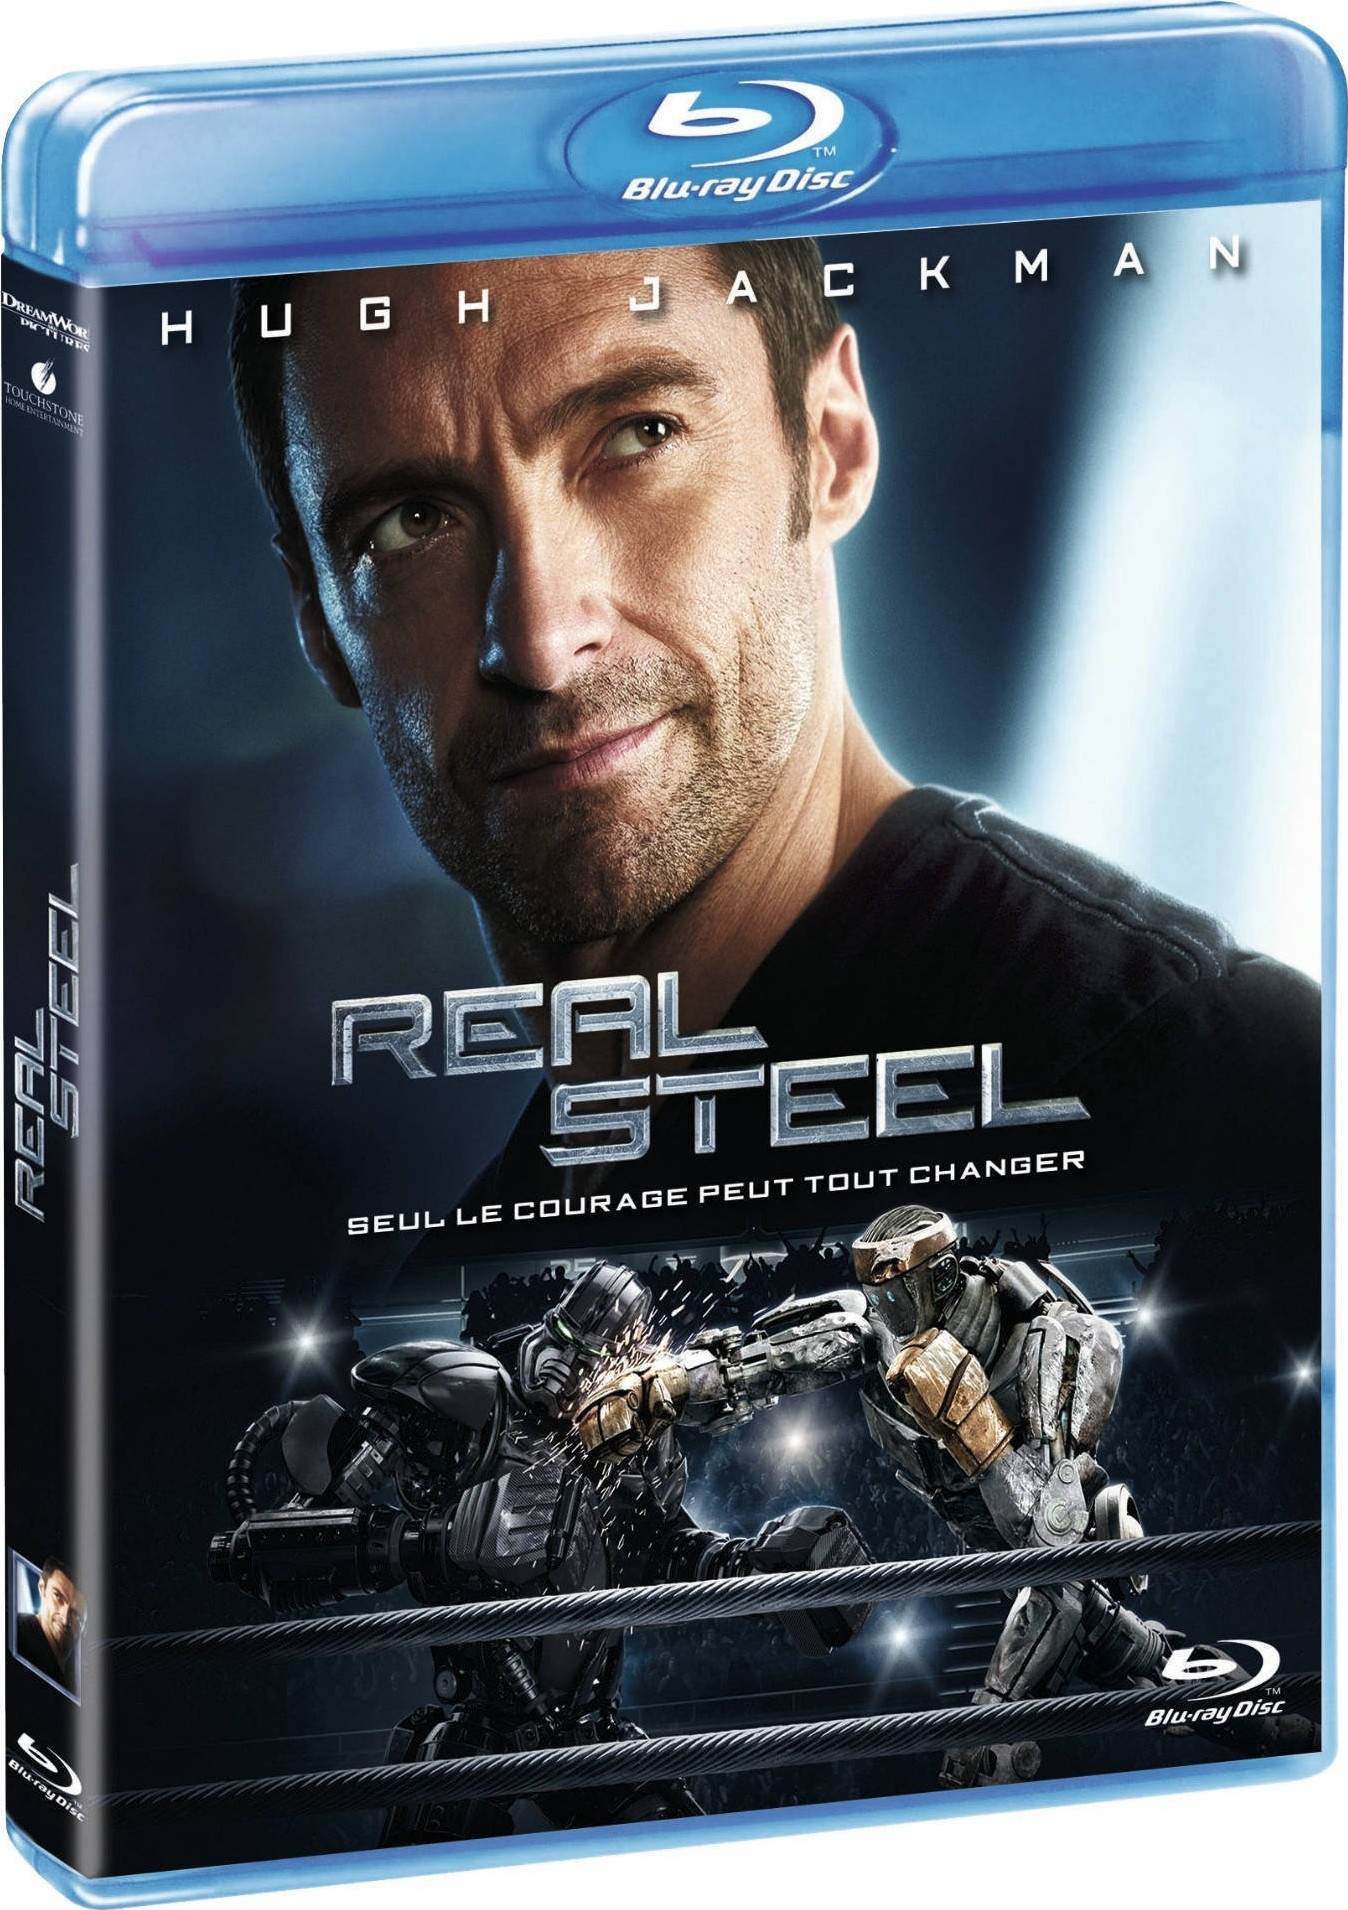 [铁甲钢拳].Real.Steel.2011.BluRay.1080p.AVC.DTS-HD.MA.7.1-shhaclm@CHDBits    46.17G-1.jpg